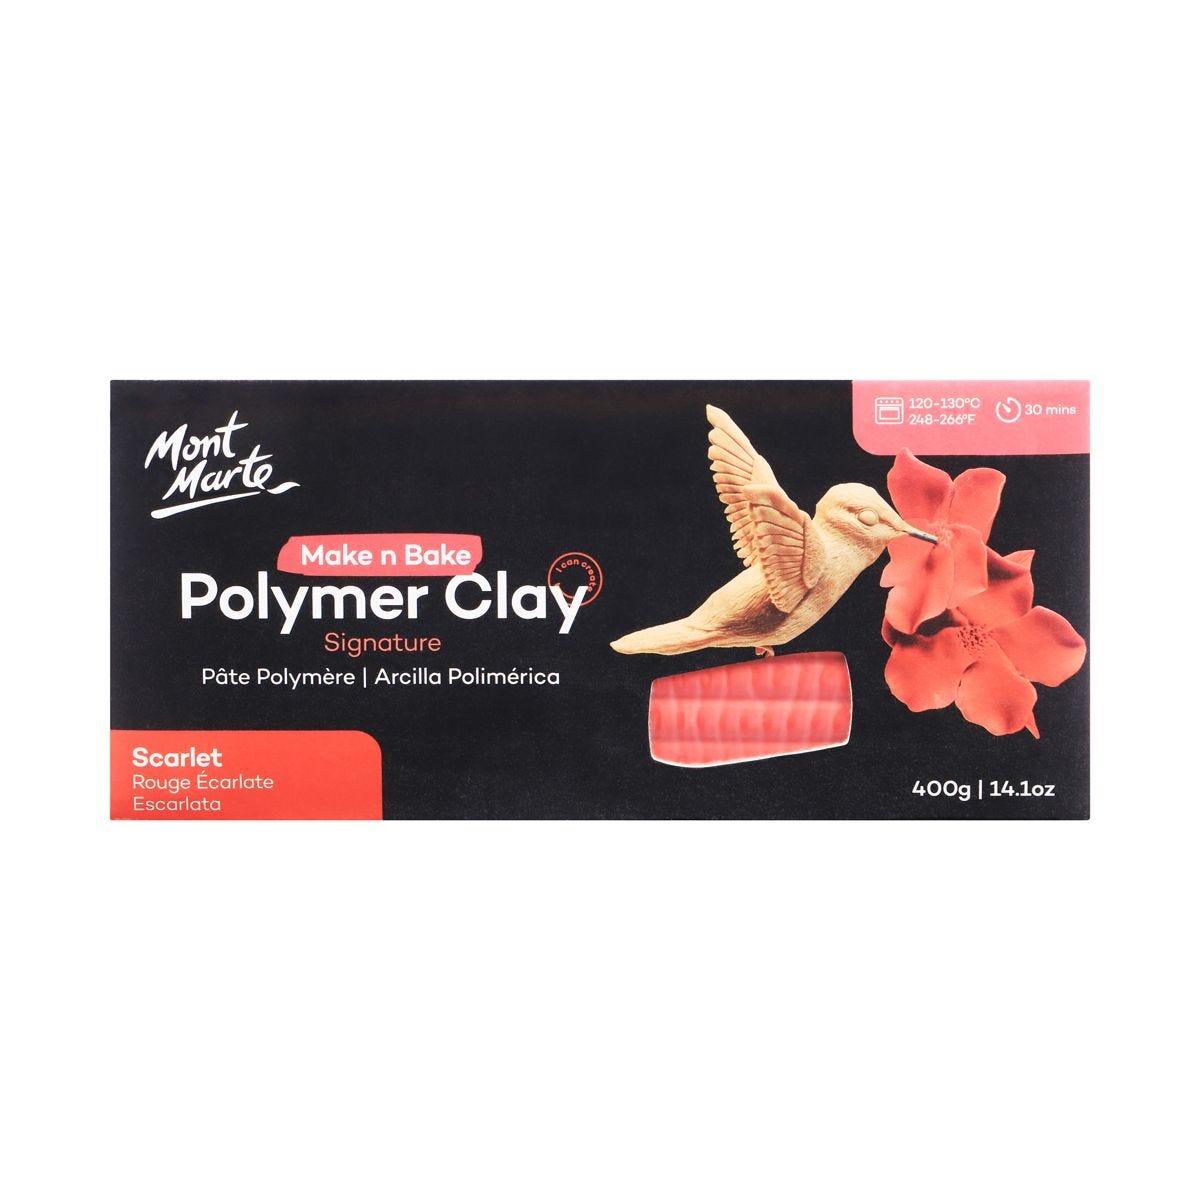 Make n Bake Polymer Clay Signature 400g (14.1oz) - Scarlet Mont Marte - Glowish